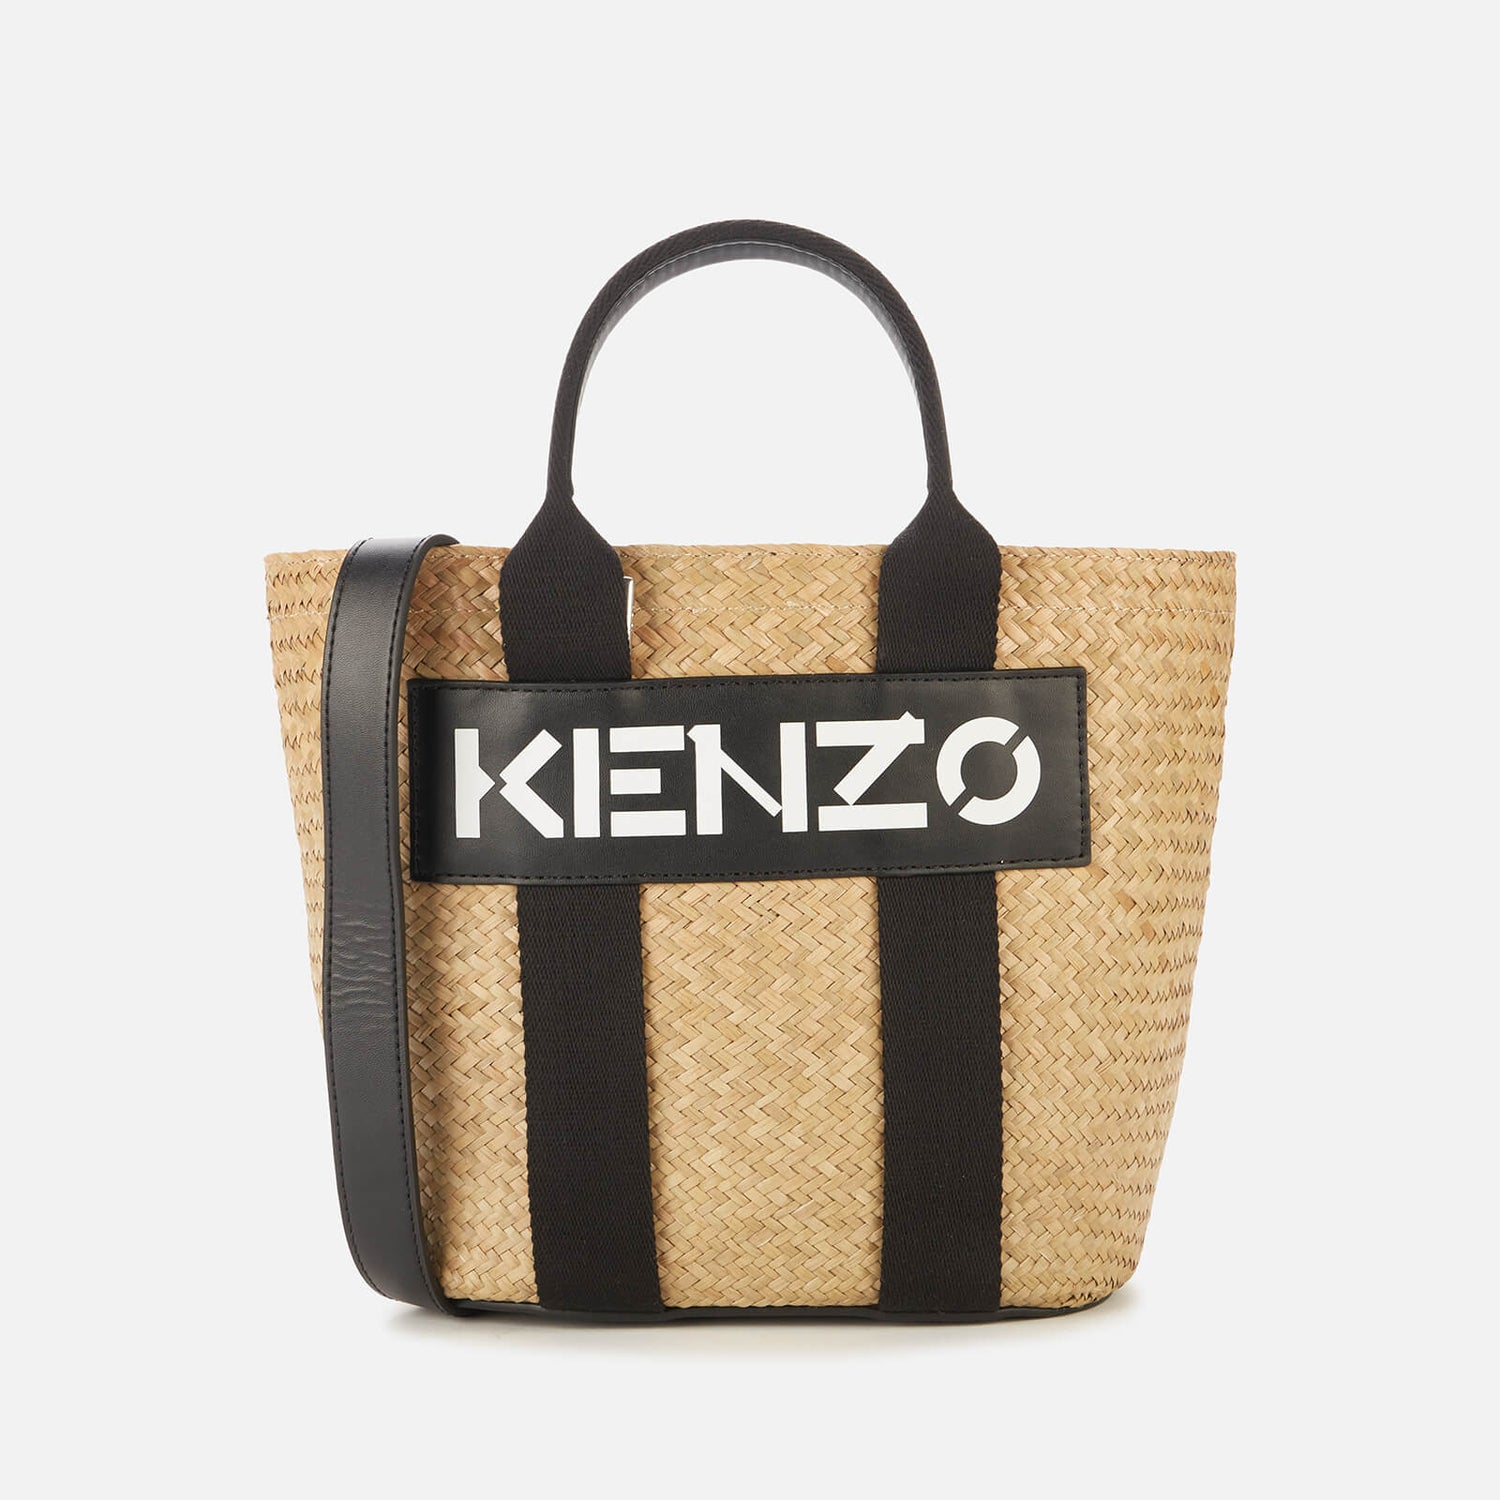 KENZO Women's Kabana Small Basket - Black